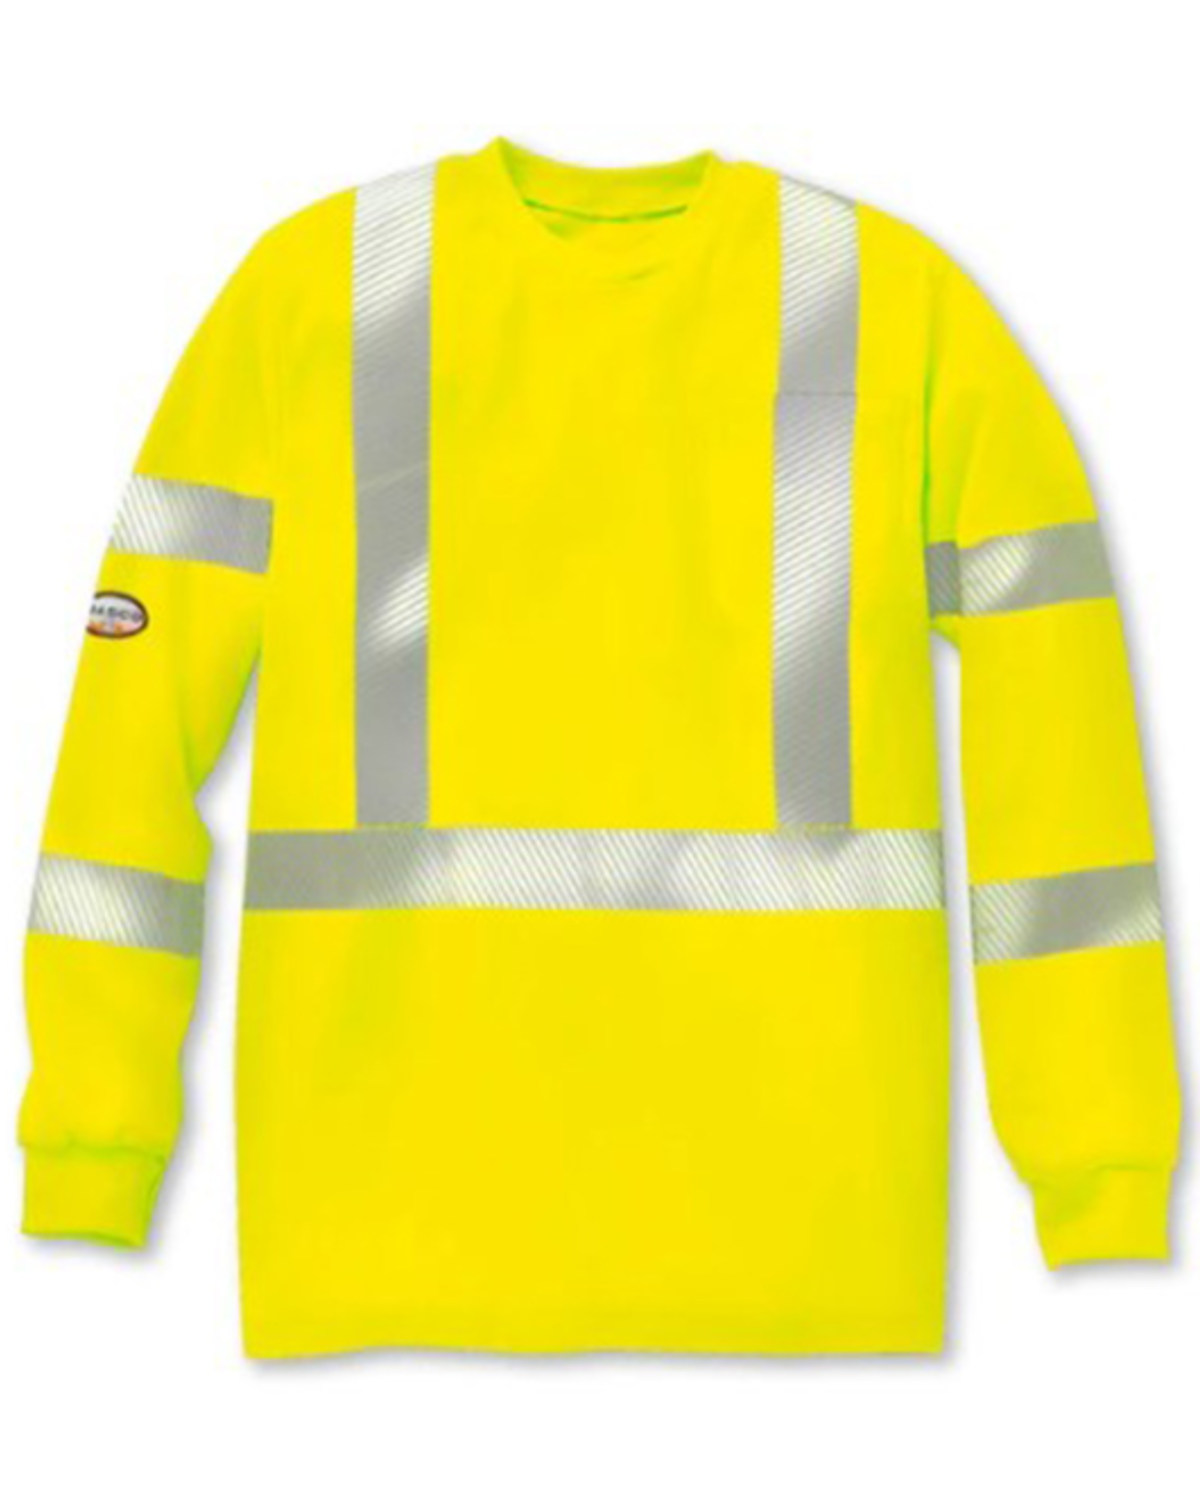 Rasco Men's FR Hi-Vis Segmented Trim Long Sleeve Work Shirt